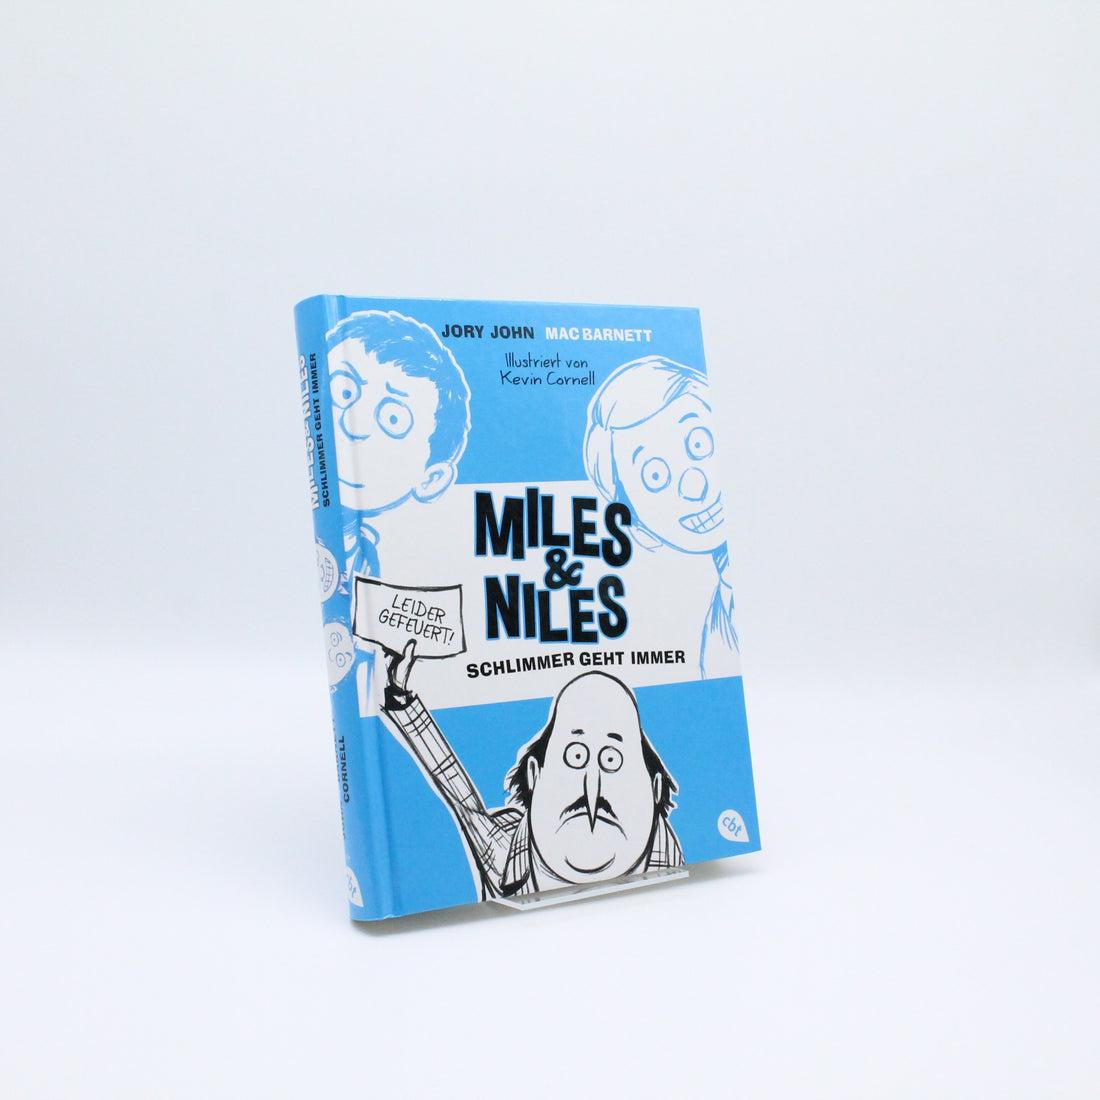 Bücher & Co - Jugendbuch - cbt - Schlimmer geht immer - Miles & Niles - blau